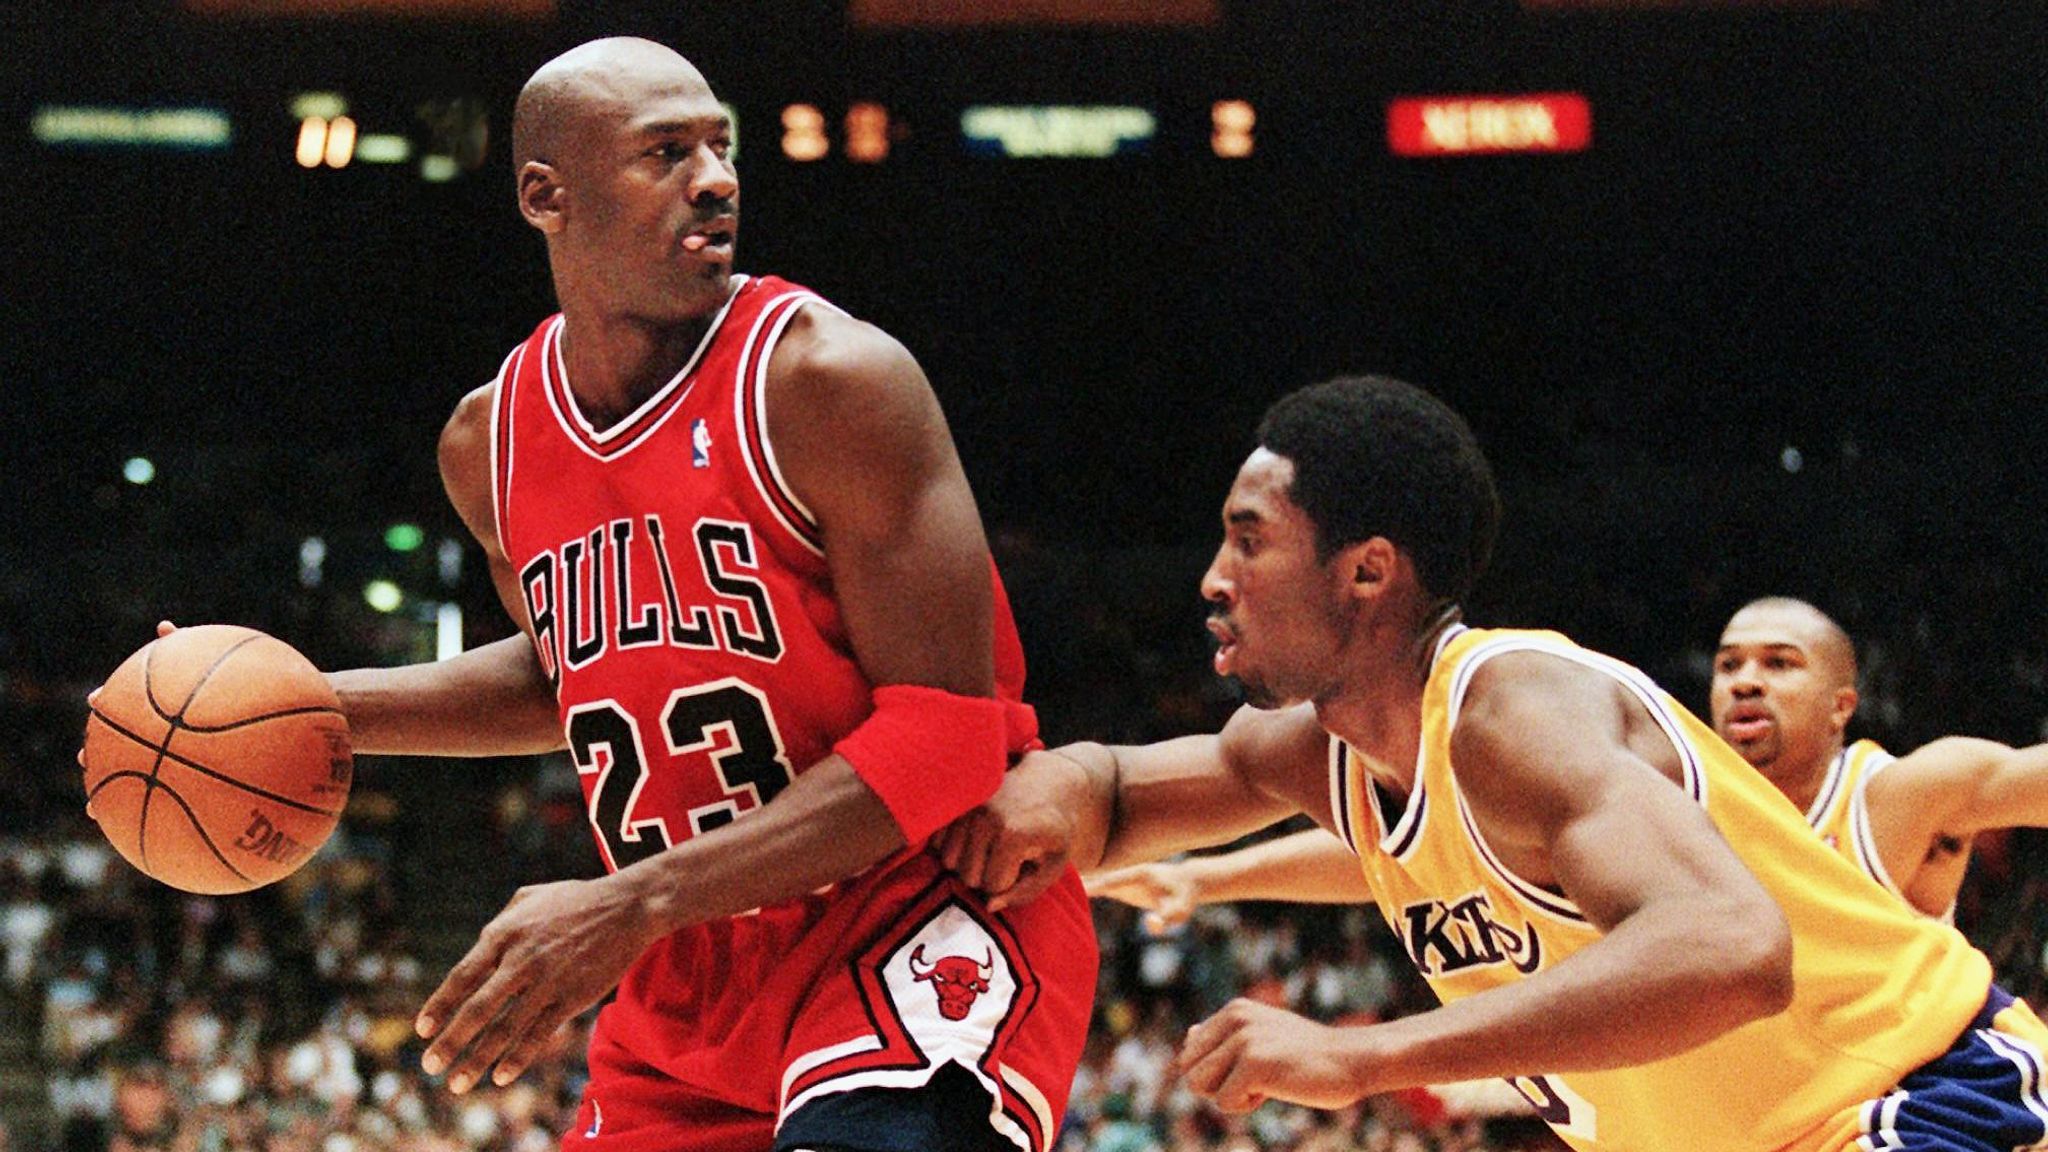 Free download Michael Jordan Kobe Bryant by Wnine on [1024x386